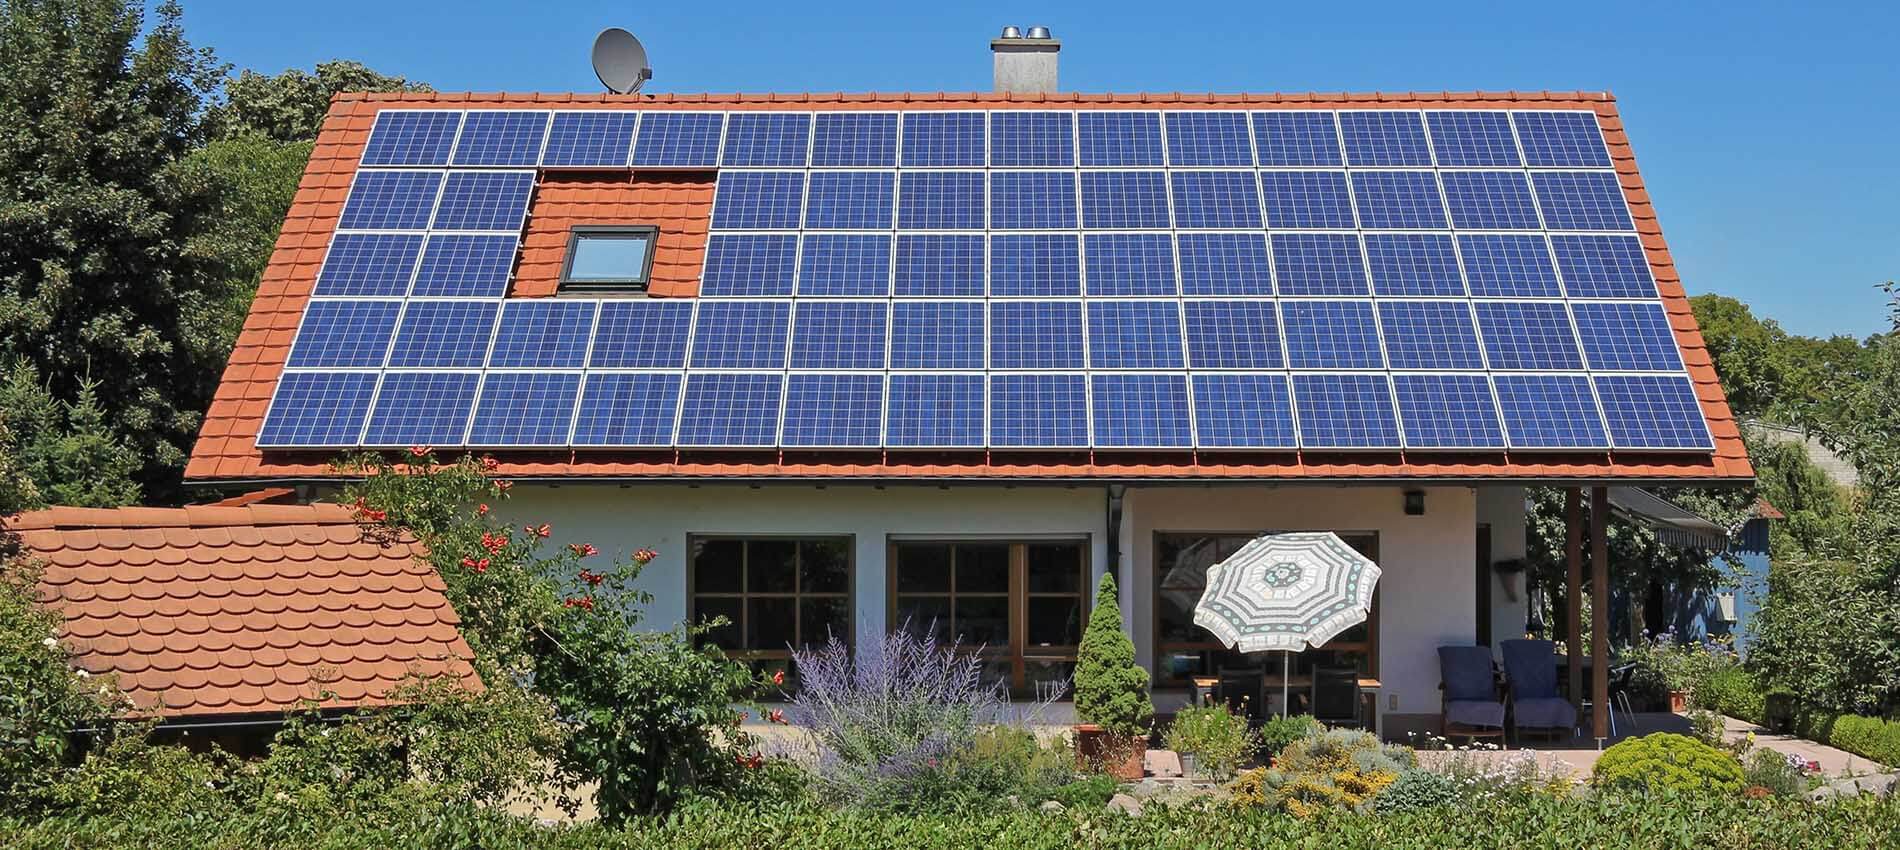 Do Installing Solar Panels Increase Property Taxes